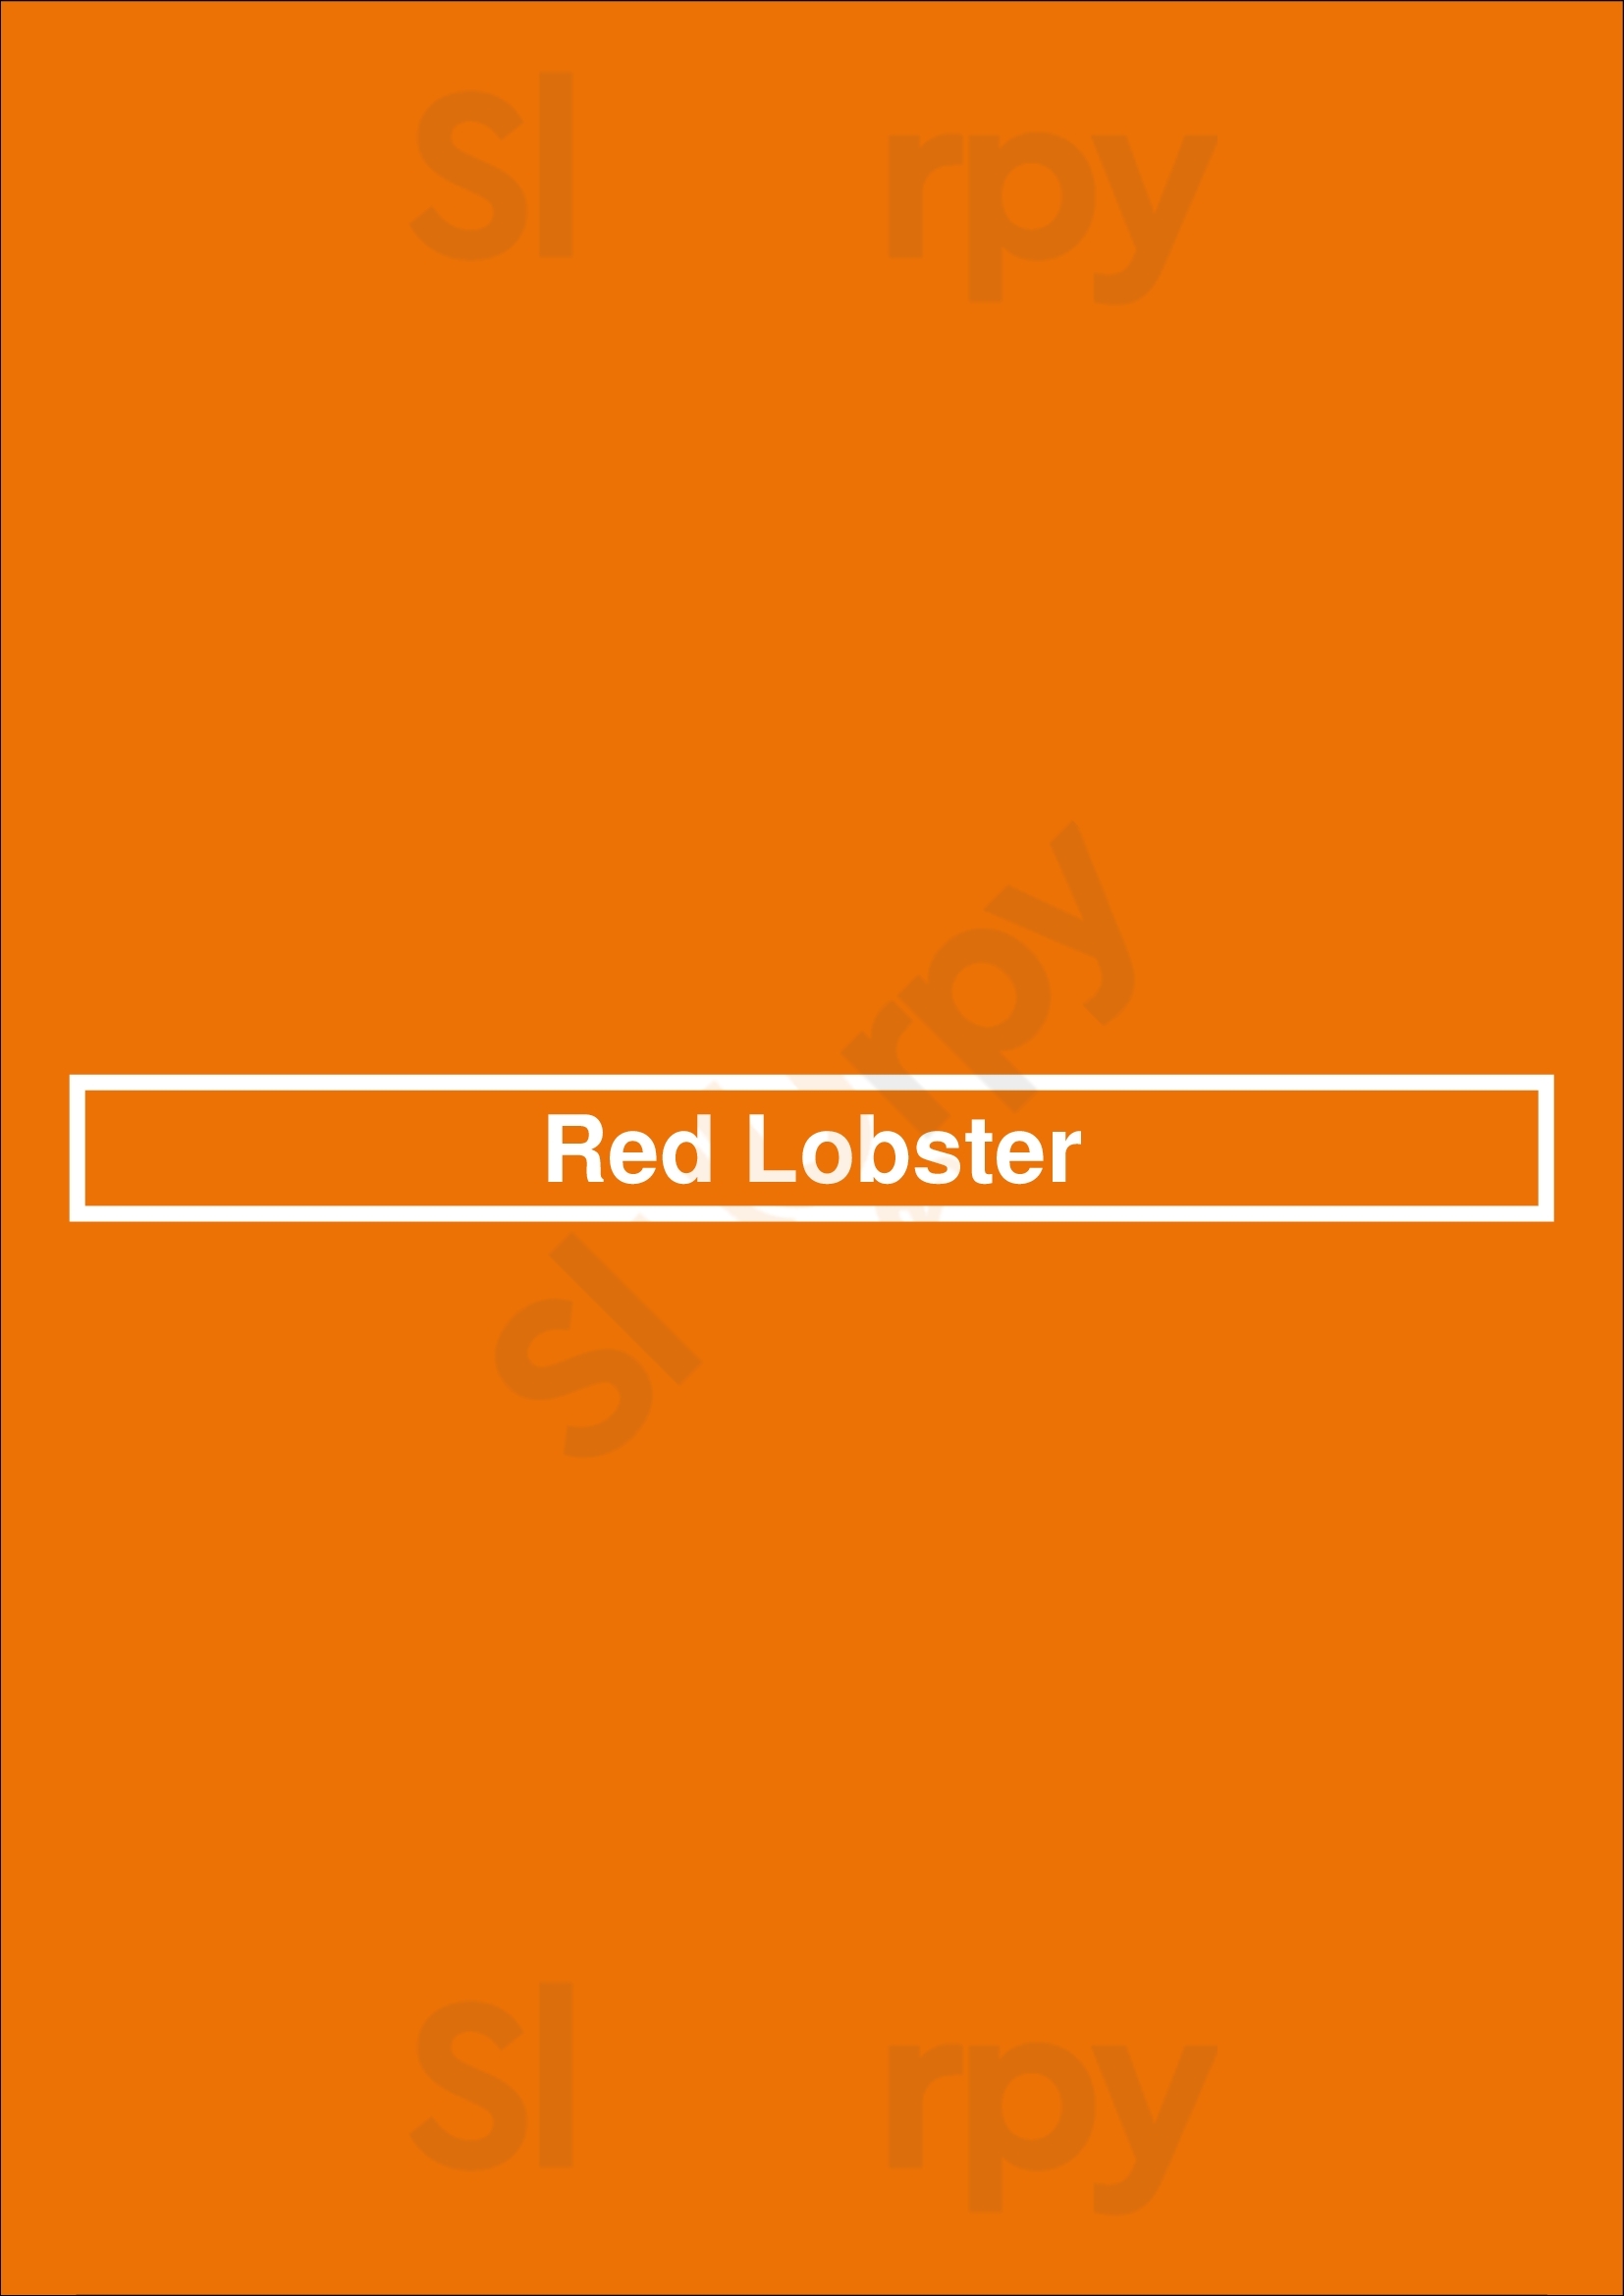 Red Lobster Knoxville Menu - 1